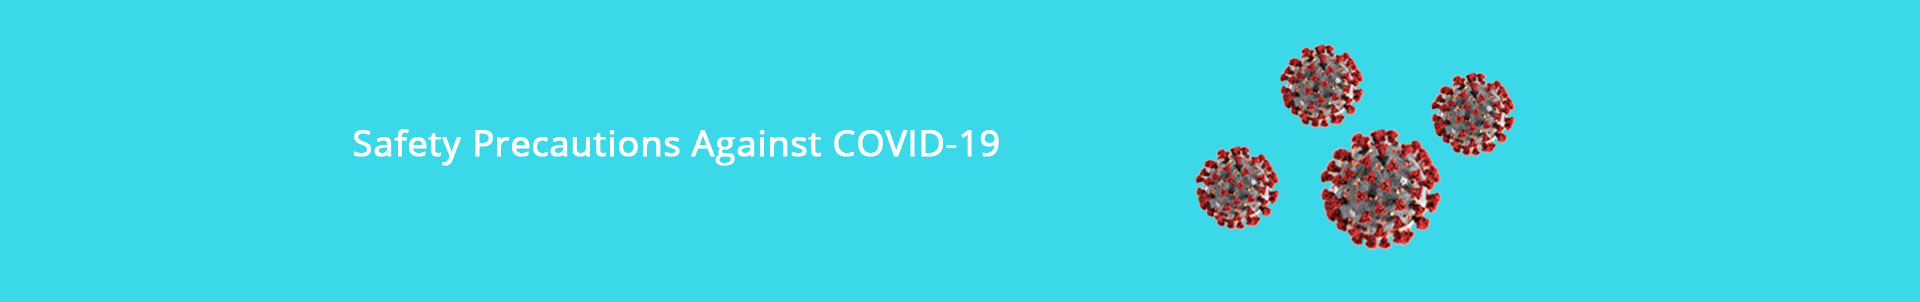 covid-19 banner